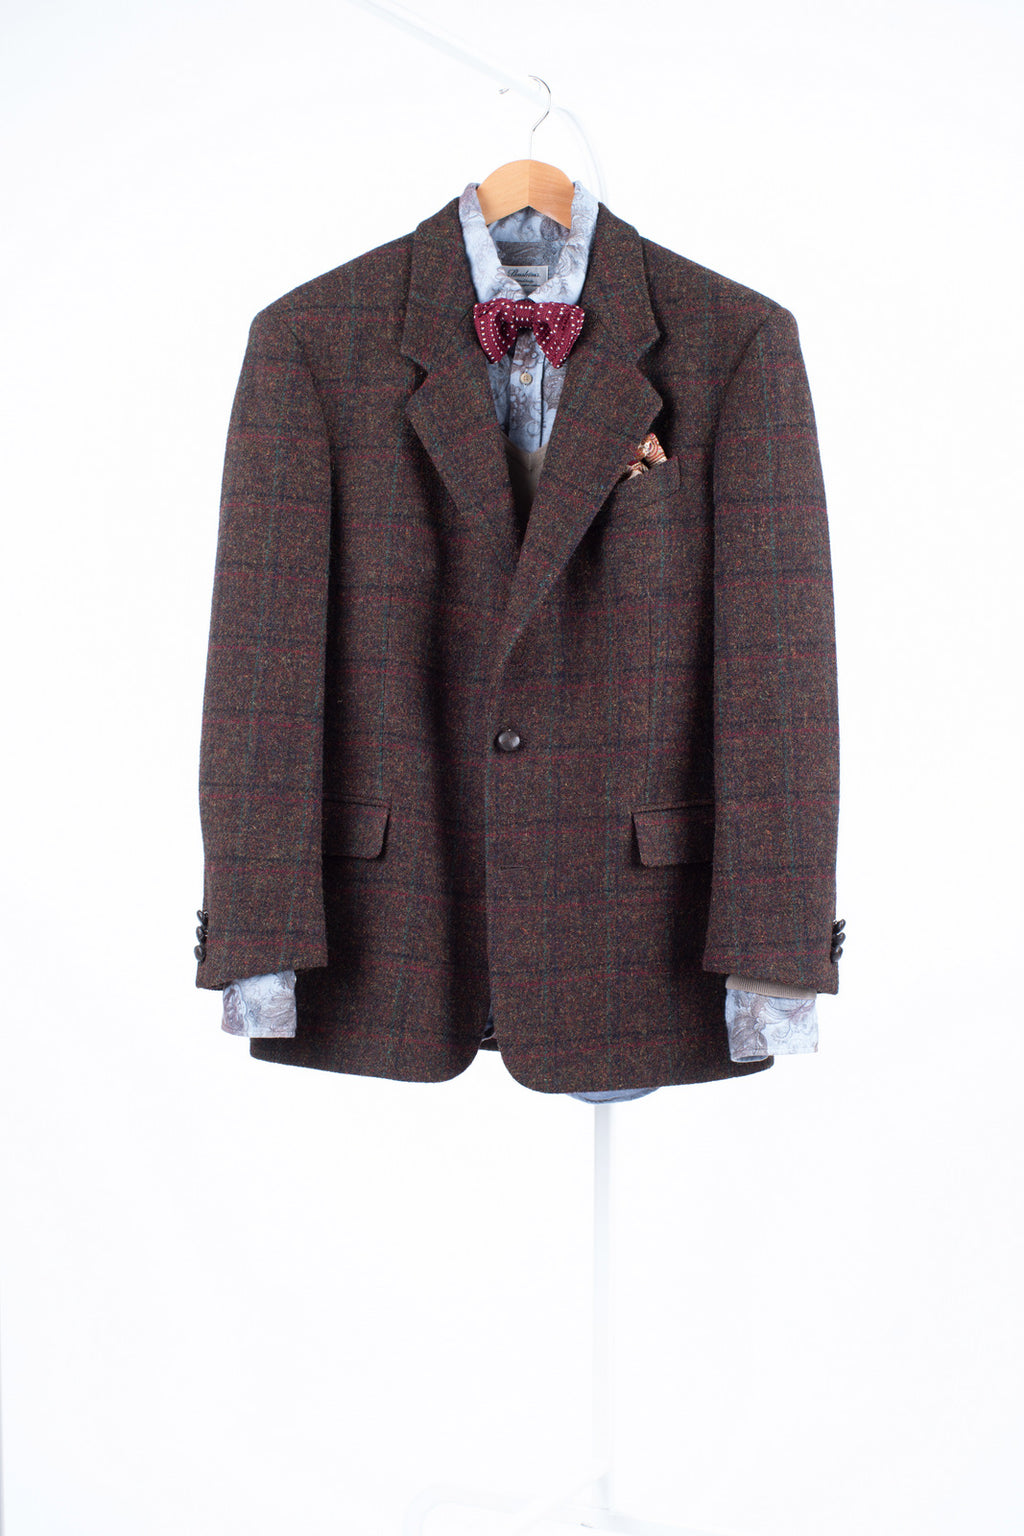 Harris Tweed Window Pane Wool 2 Button Blazer, US 40R, EU 50